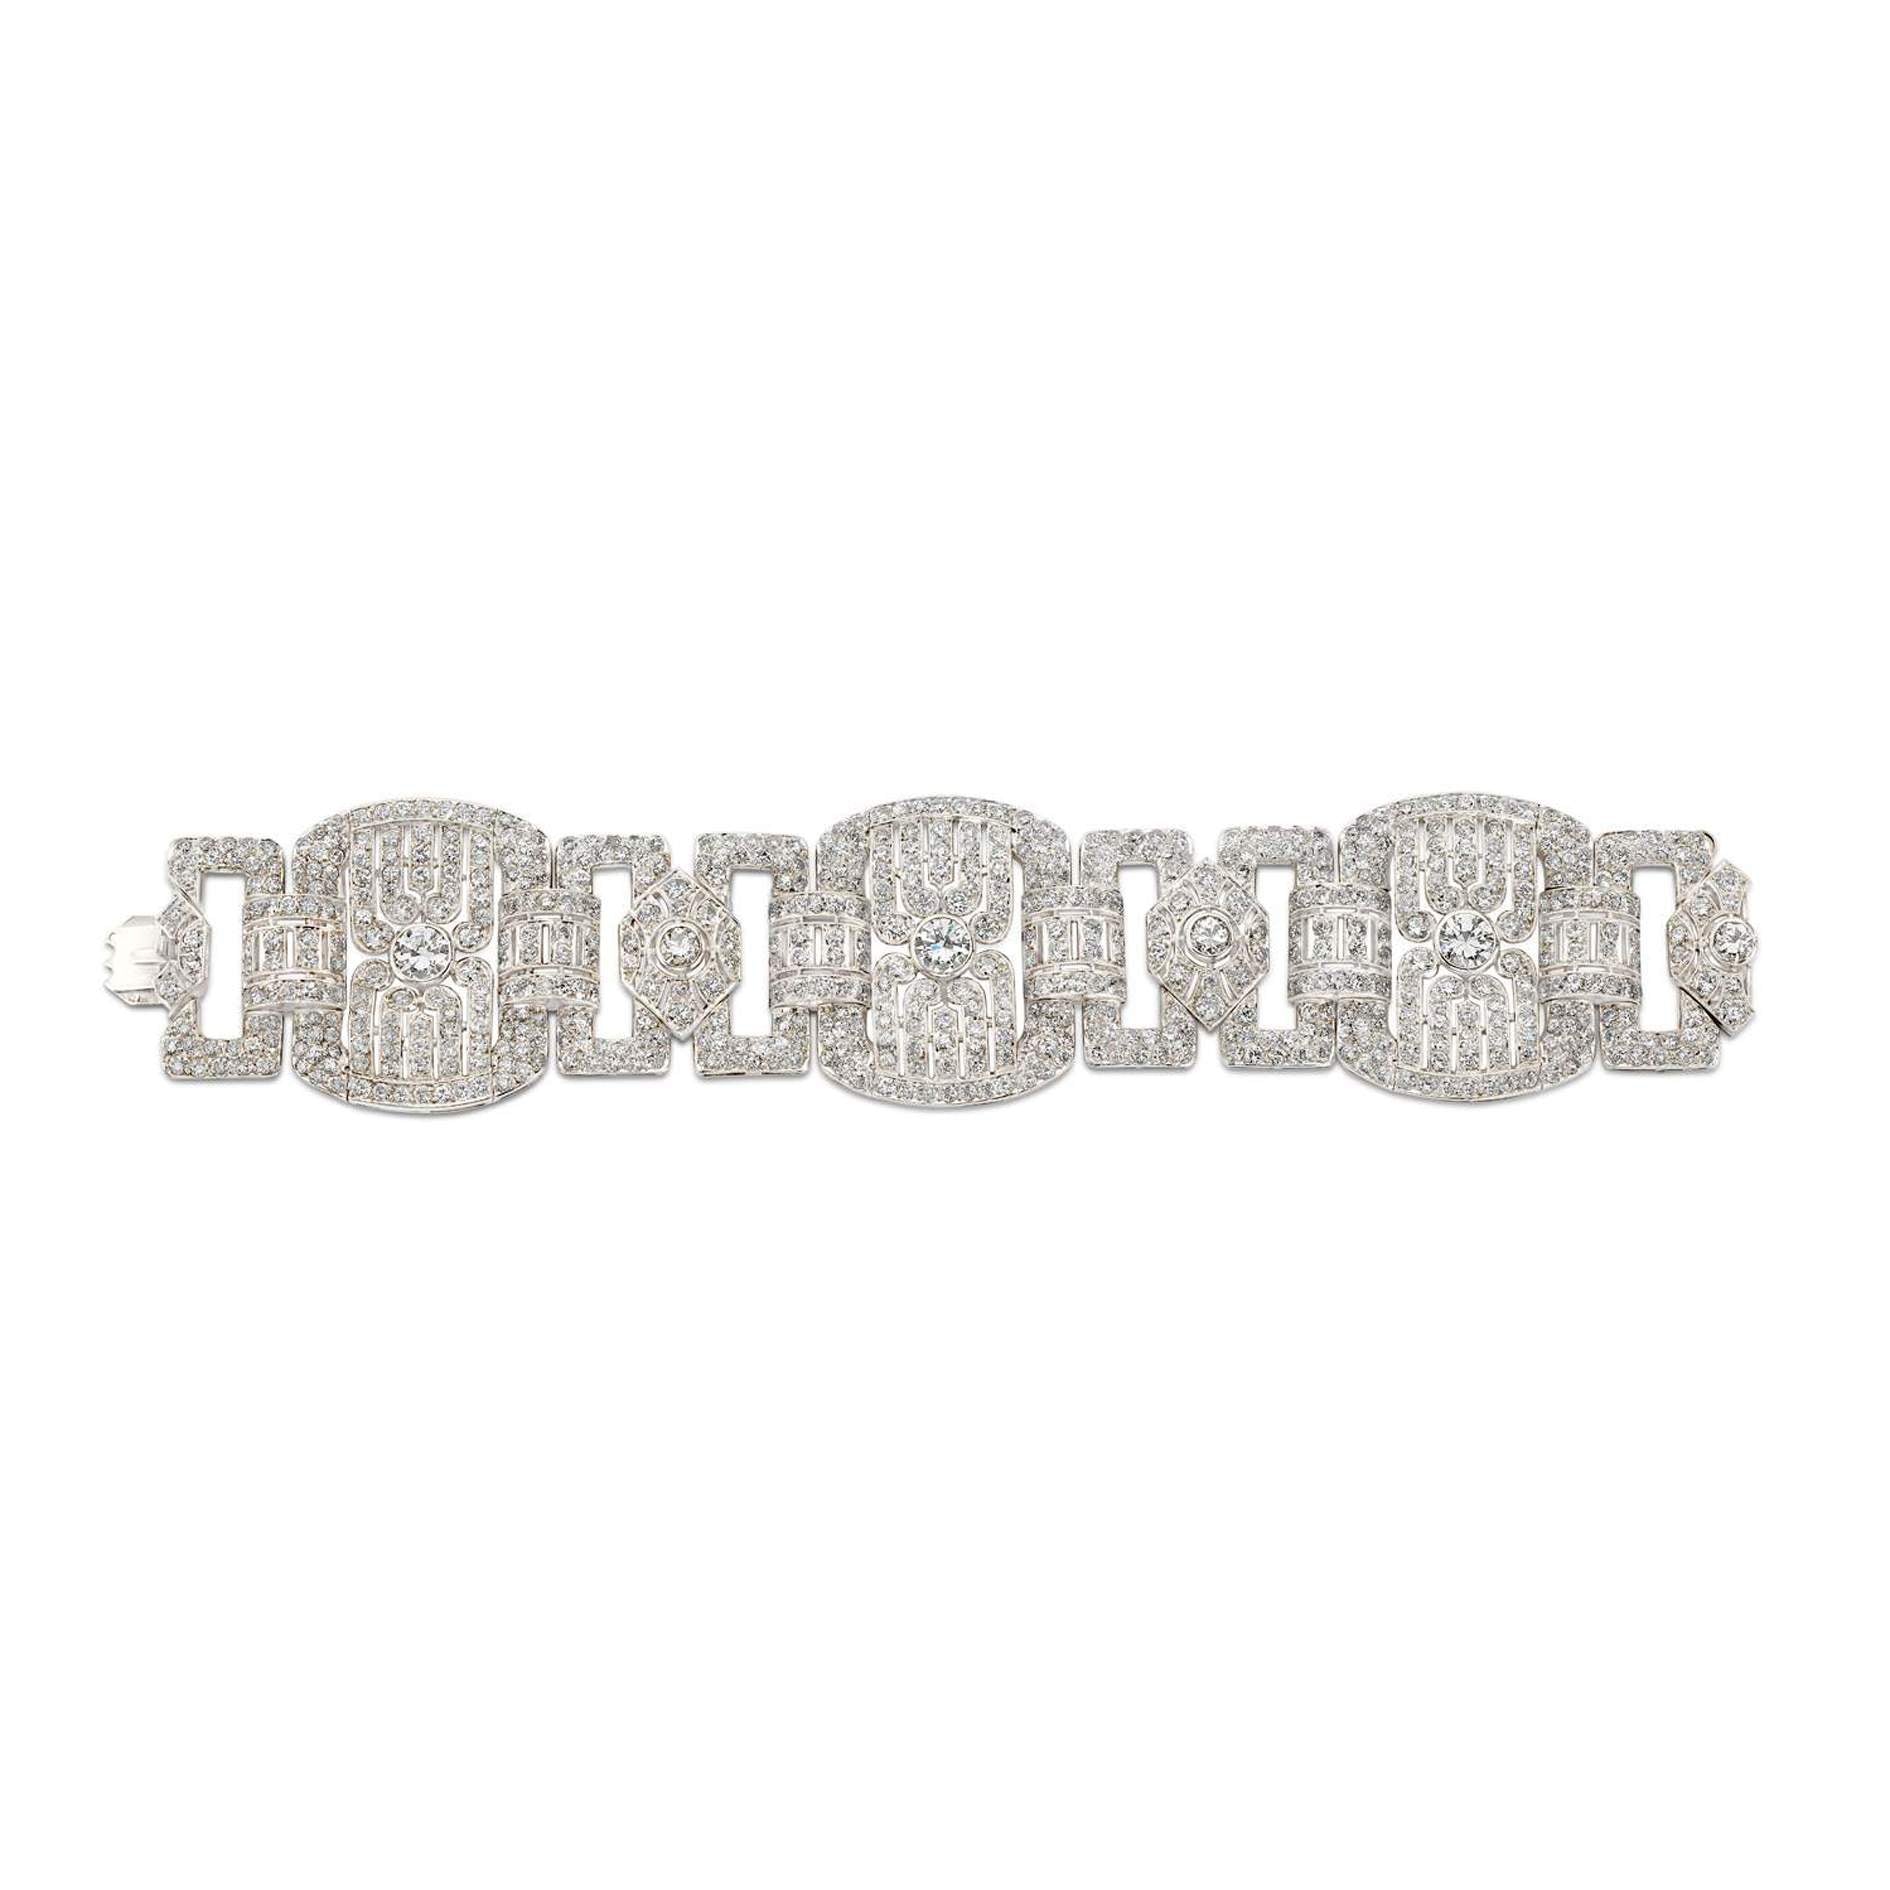 Diamond Fashion Bracelet